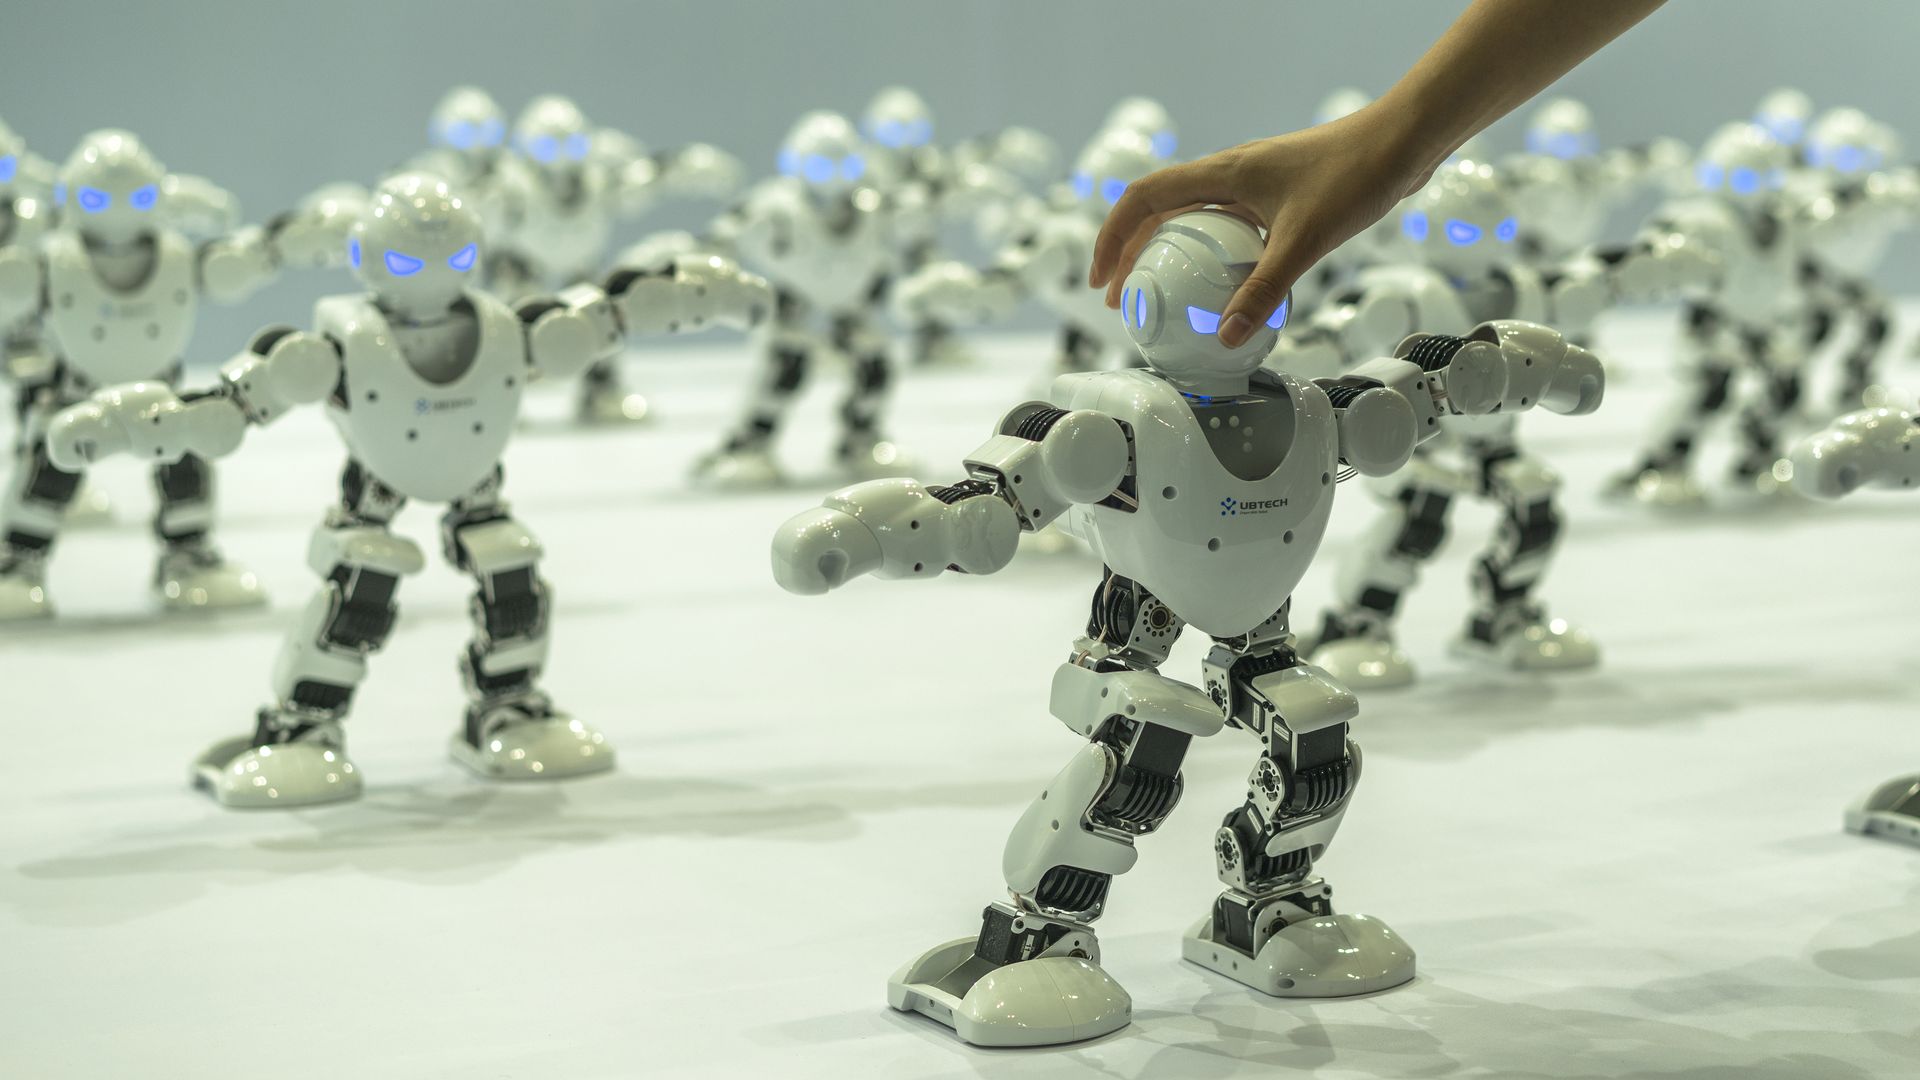 robots dance at consumer electronics trade show